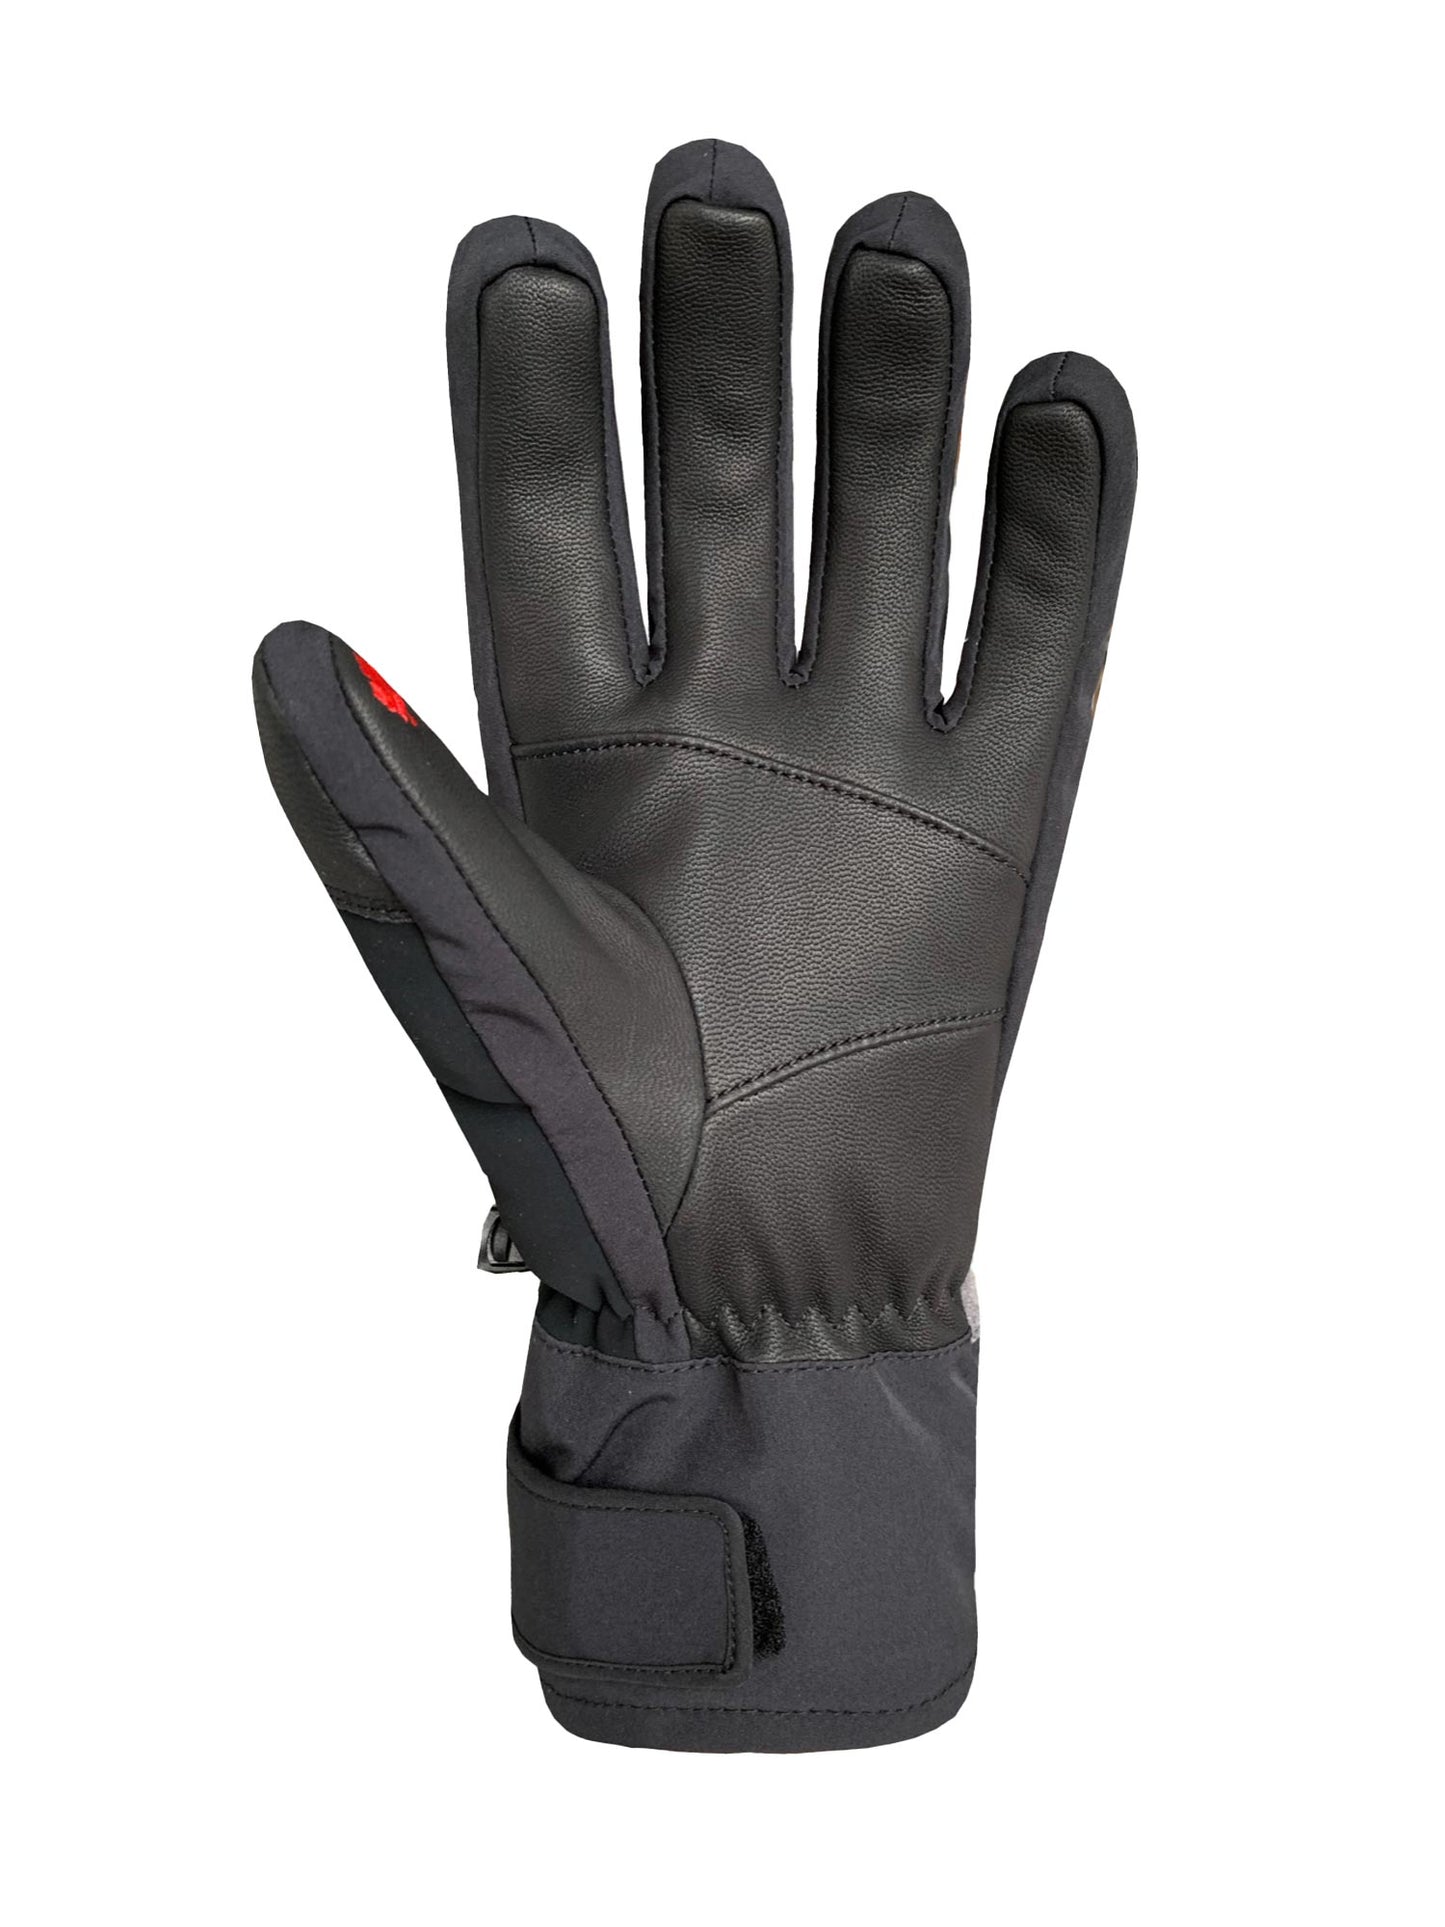 Auclair Avalanche Glove - Men's